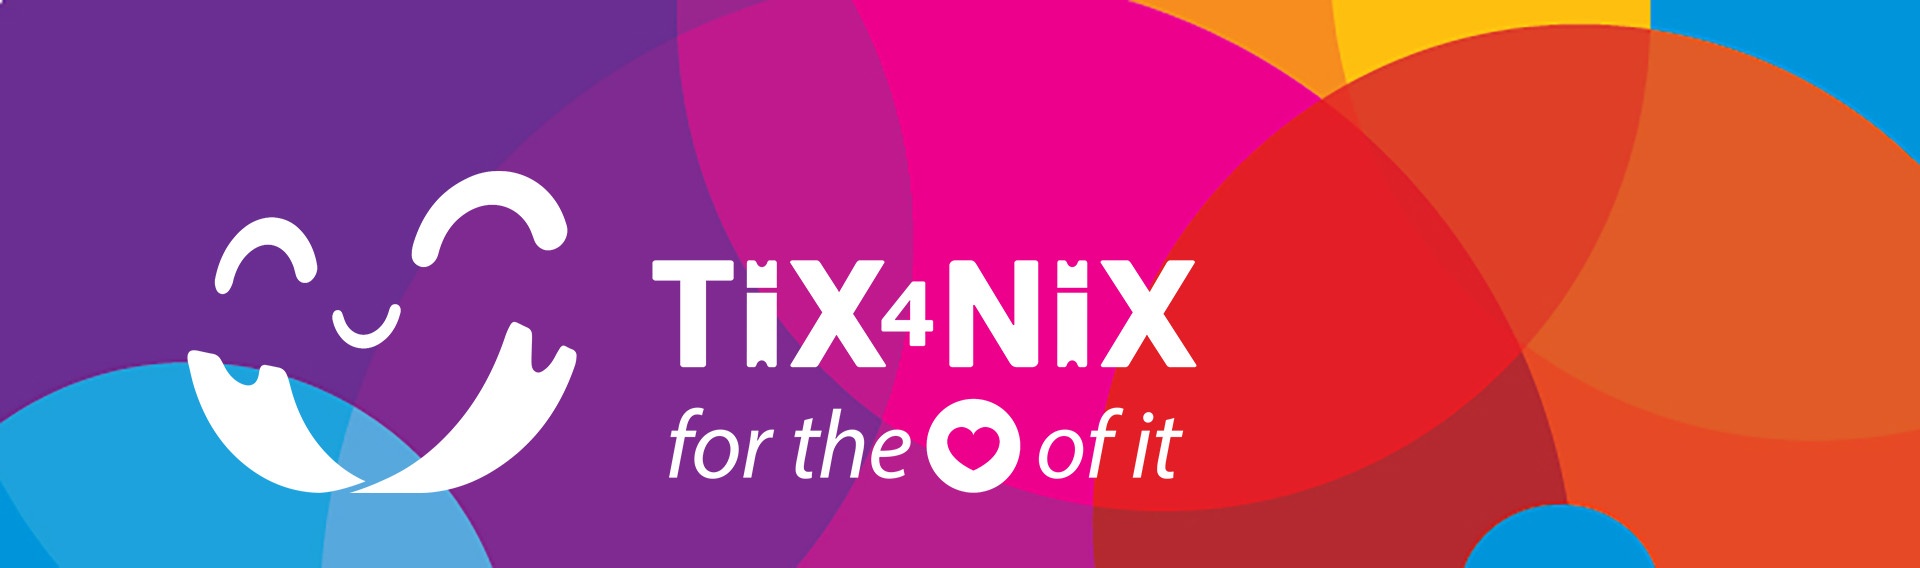 Tix4Nix Webhead_ColorBackground-1900w